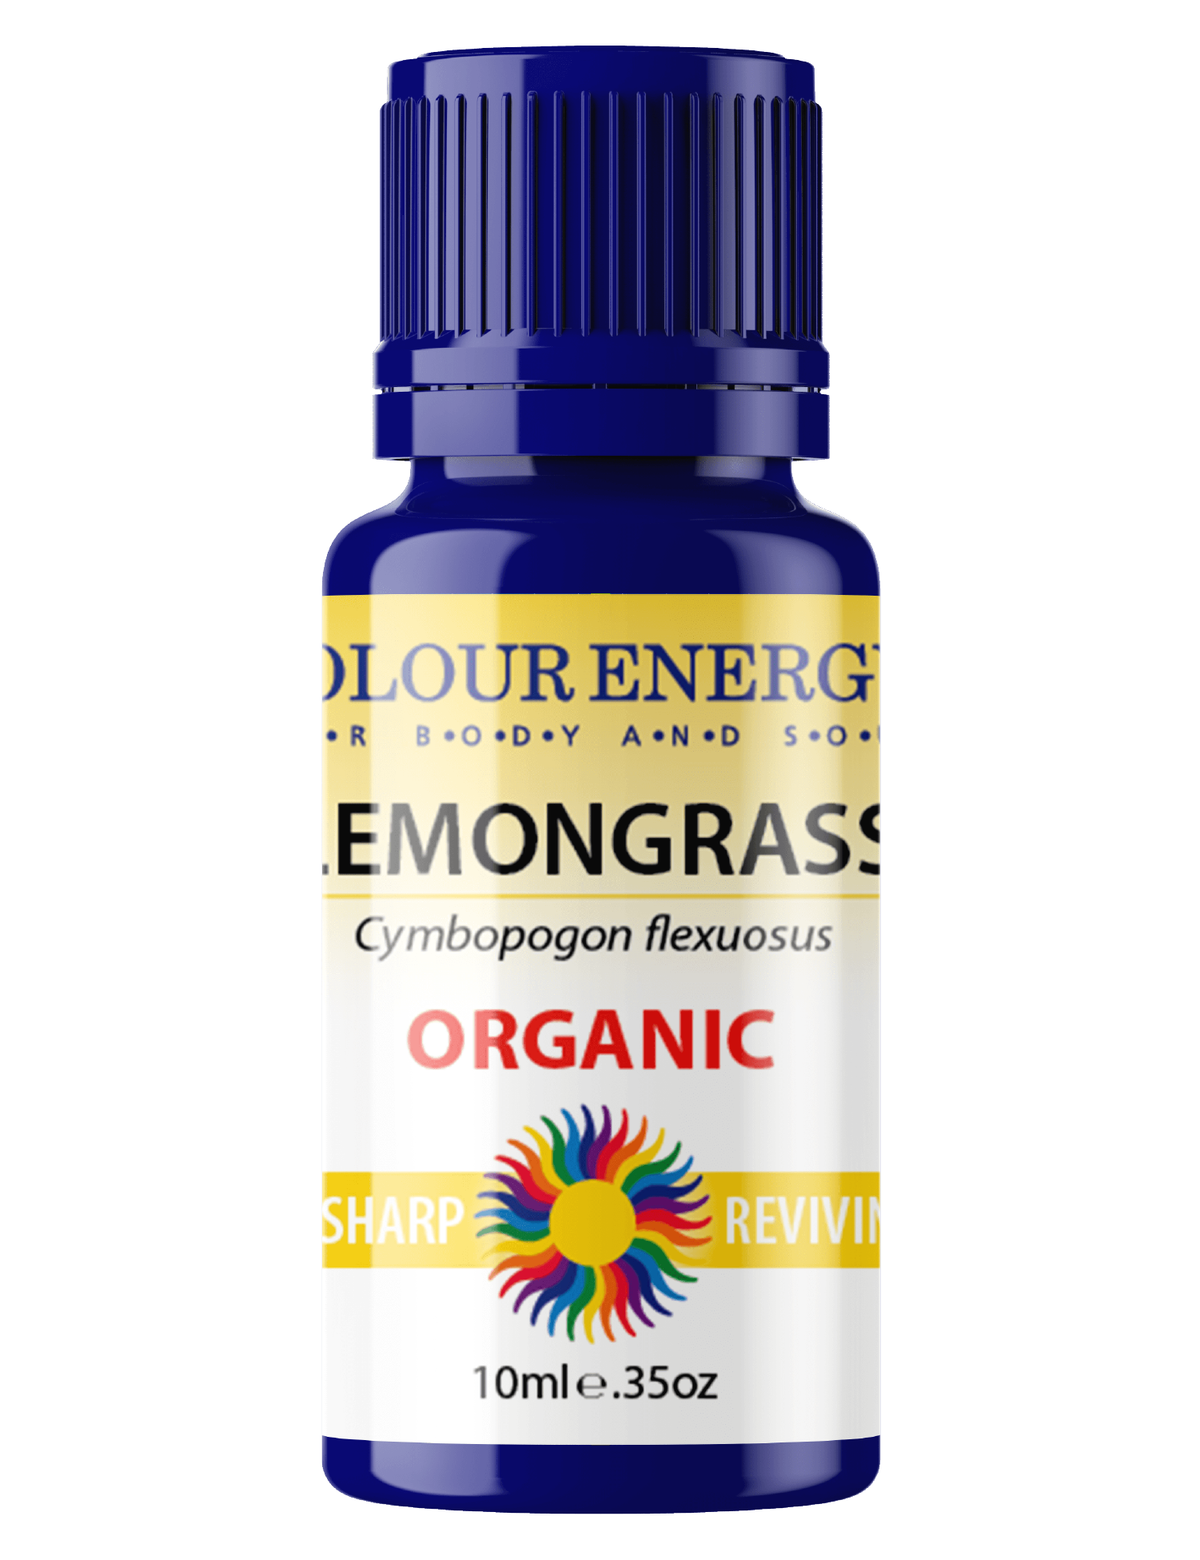 Organic Lemongrass Essential Oil